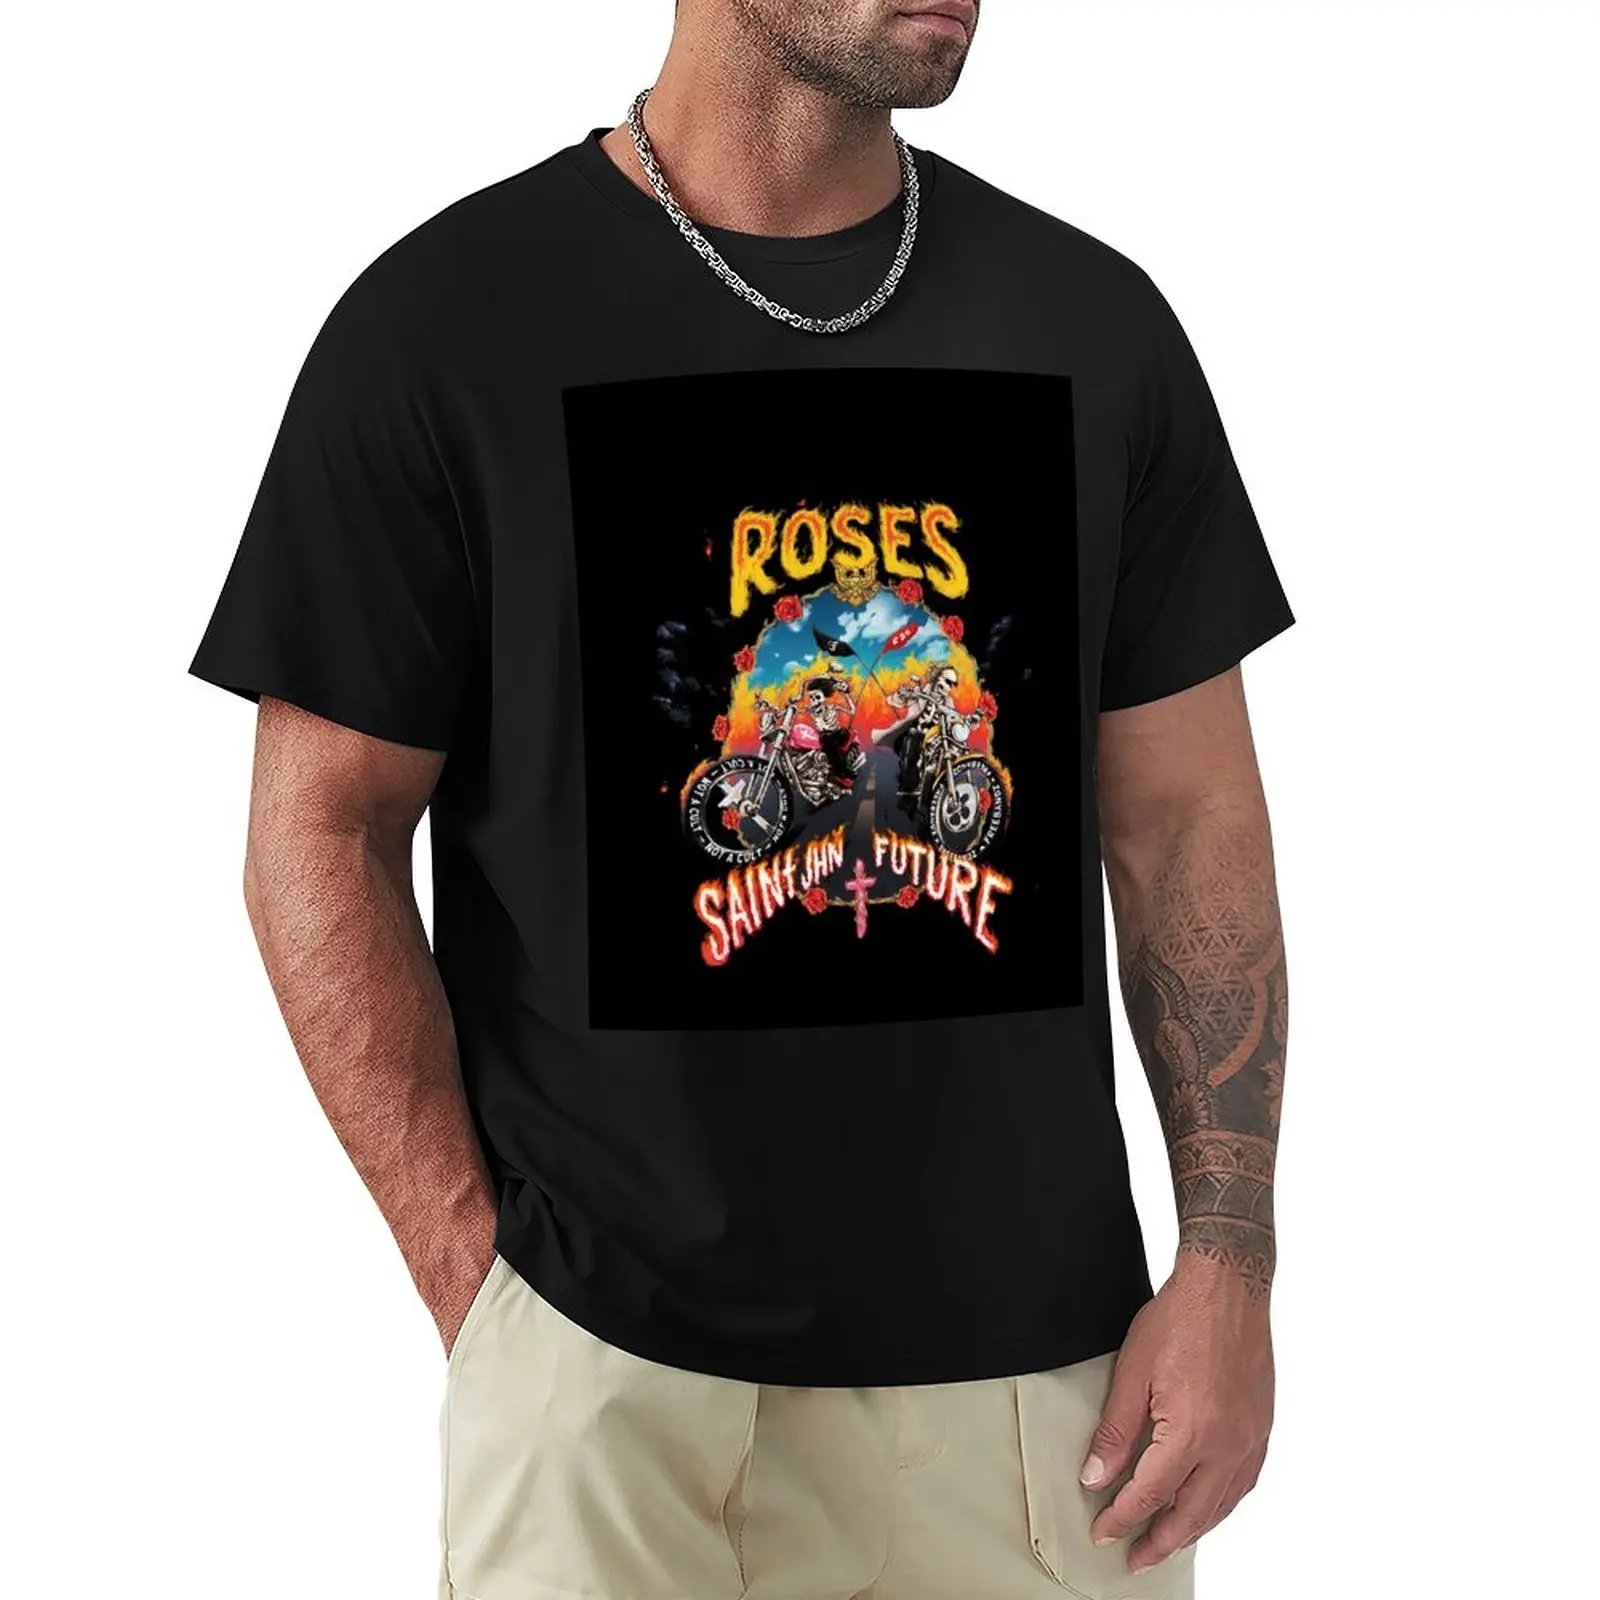 

saint jhn future roses tour 2020 malamselasa T-Shirt new edition t shirt graphic t shirt mens graphic t-shirts funny